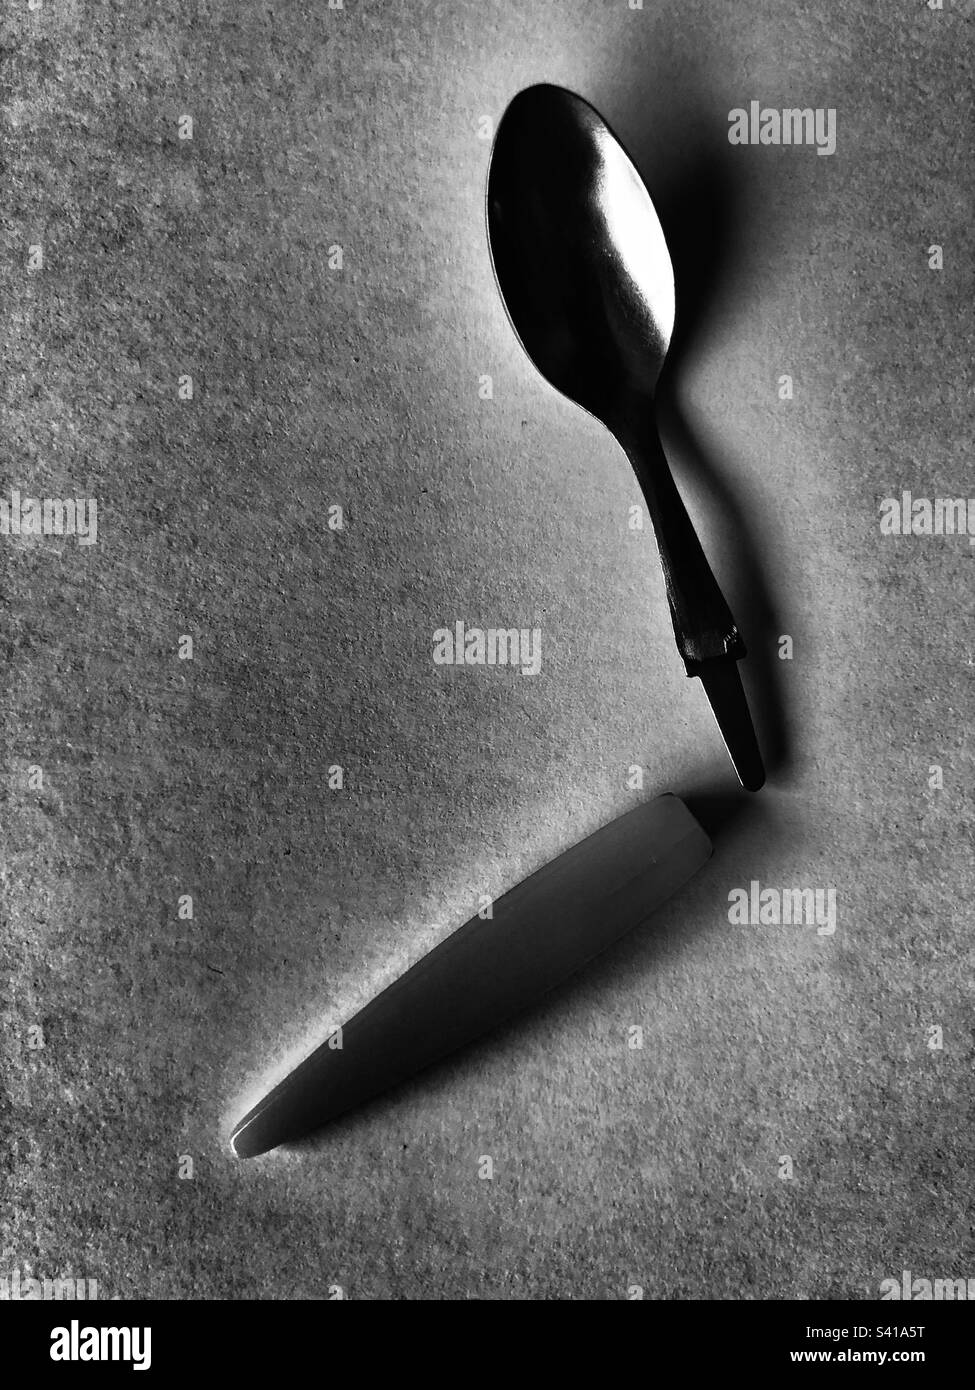 Dramática imagen de bodegón de una cucharadita rota Foto de stock